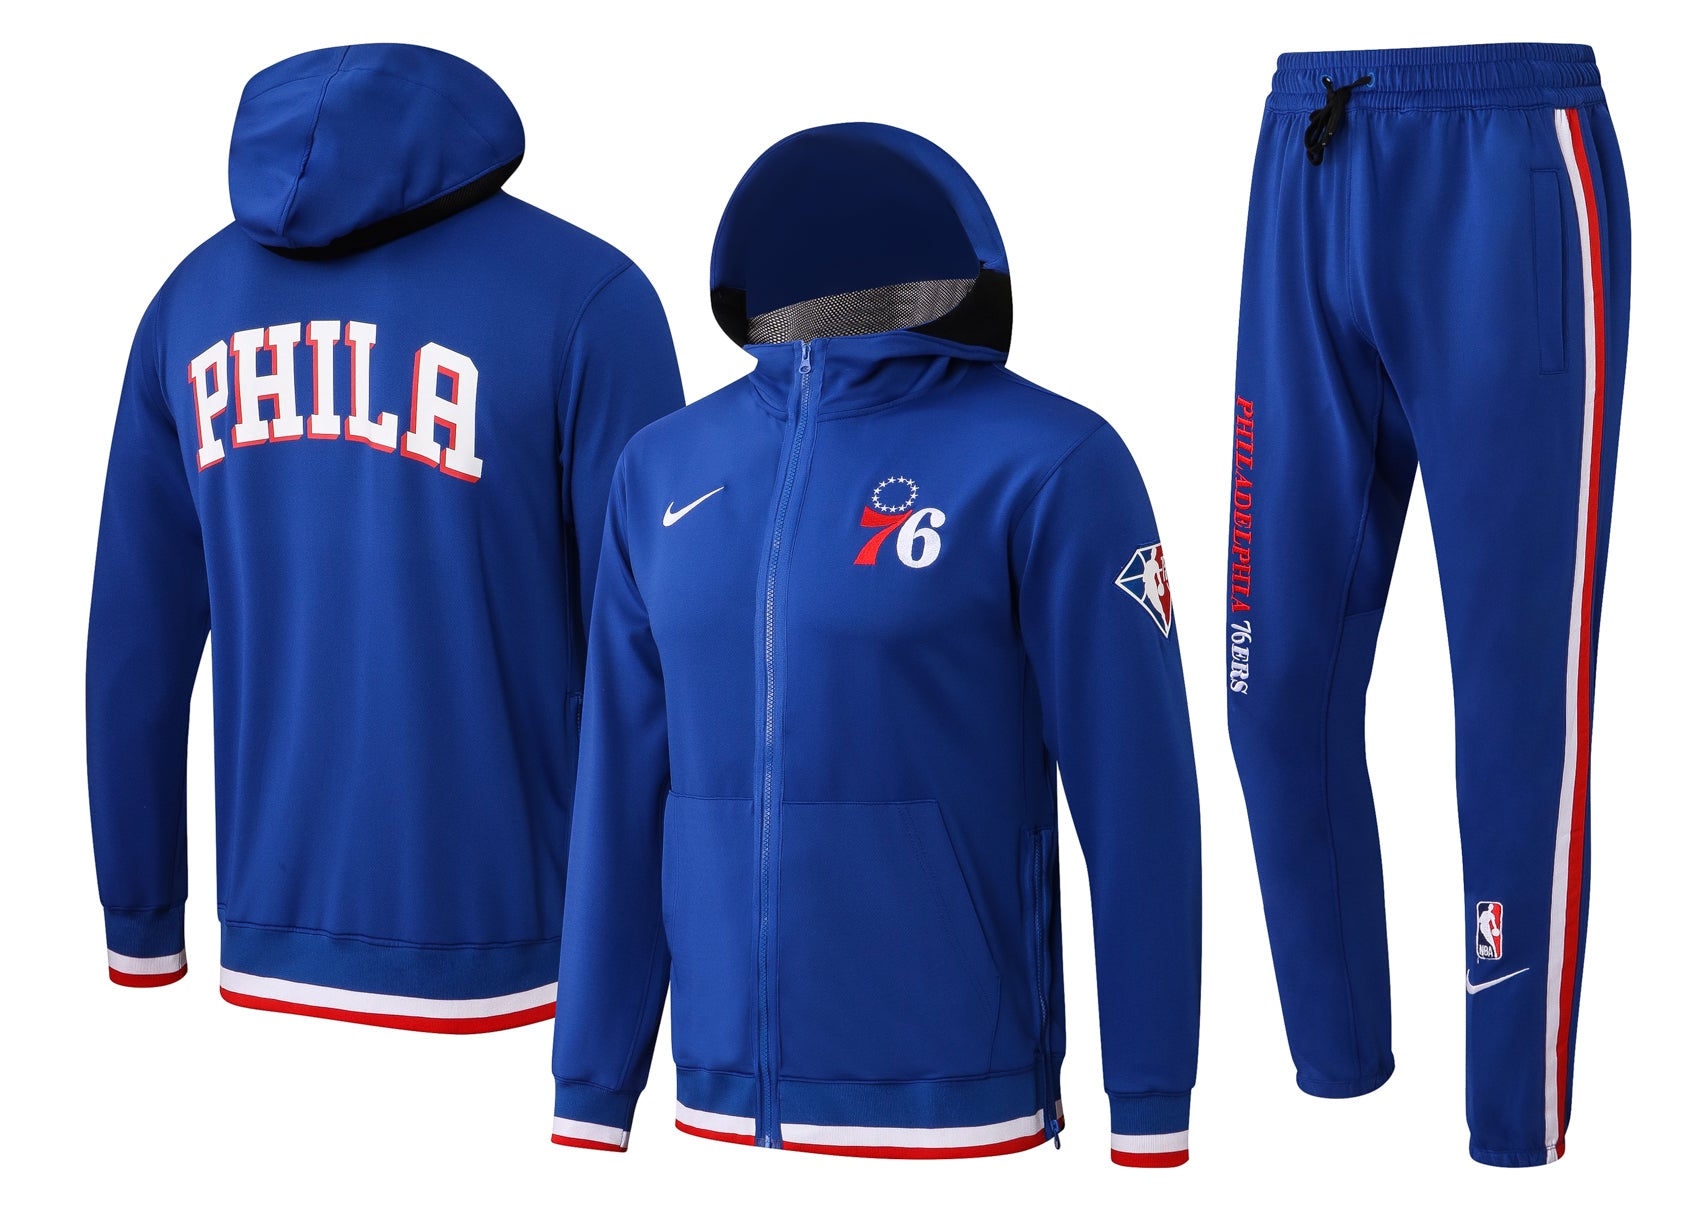 Philadelphia 76ser blue suit